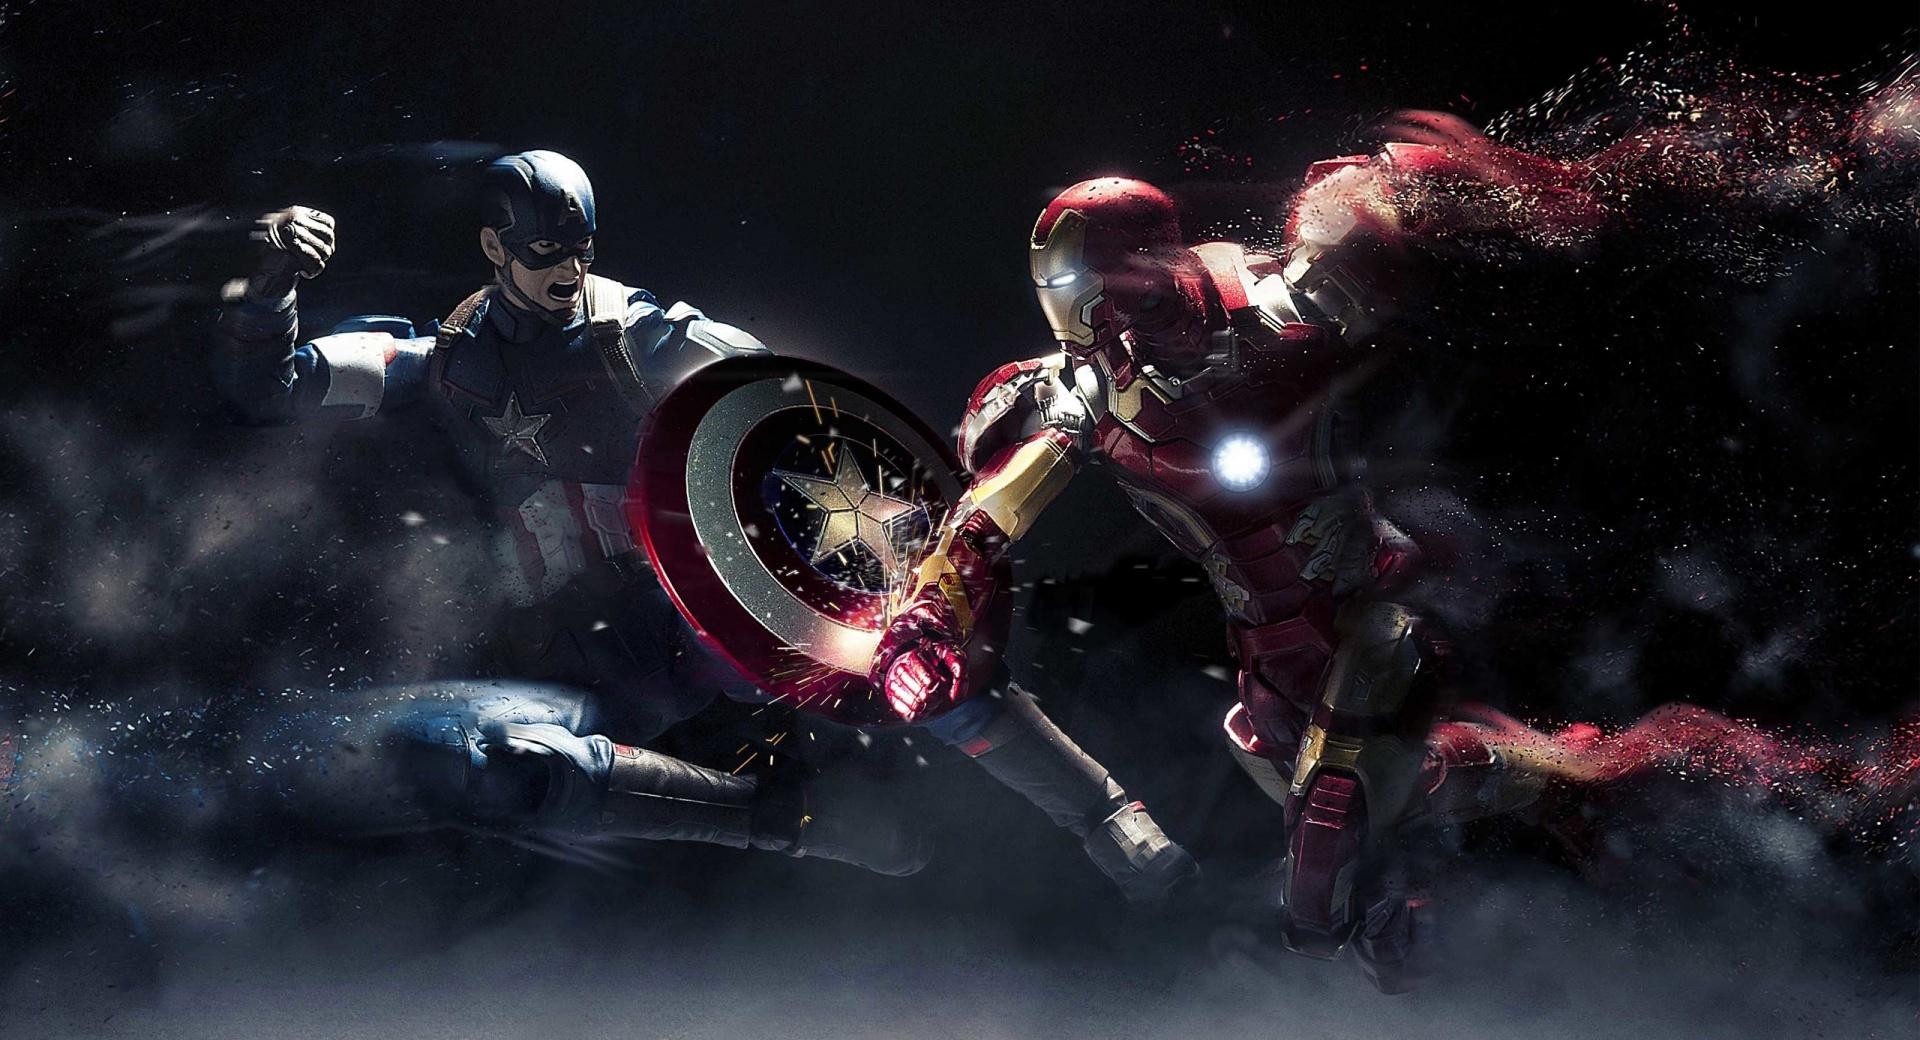 Captain America vs Iron Man wallpapers HD quality